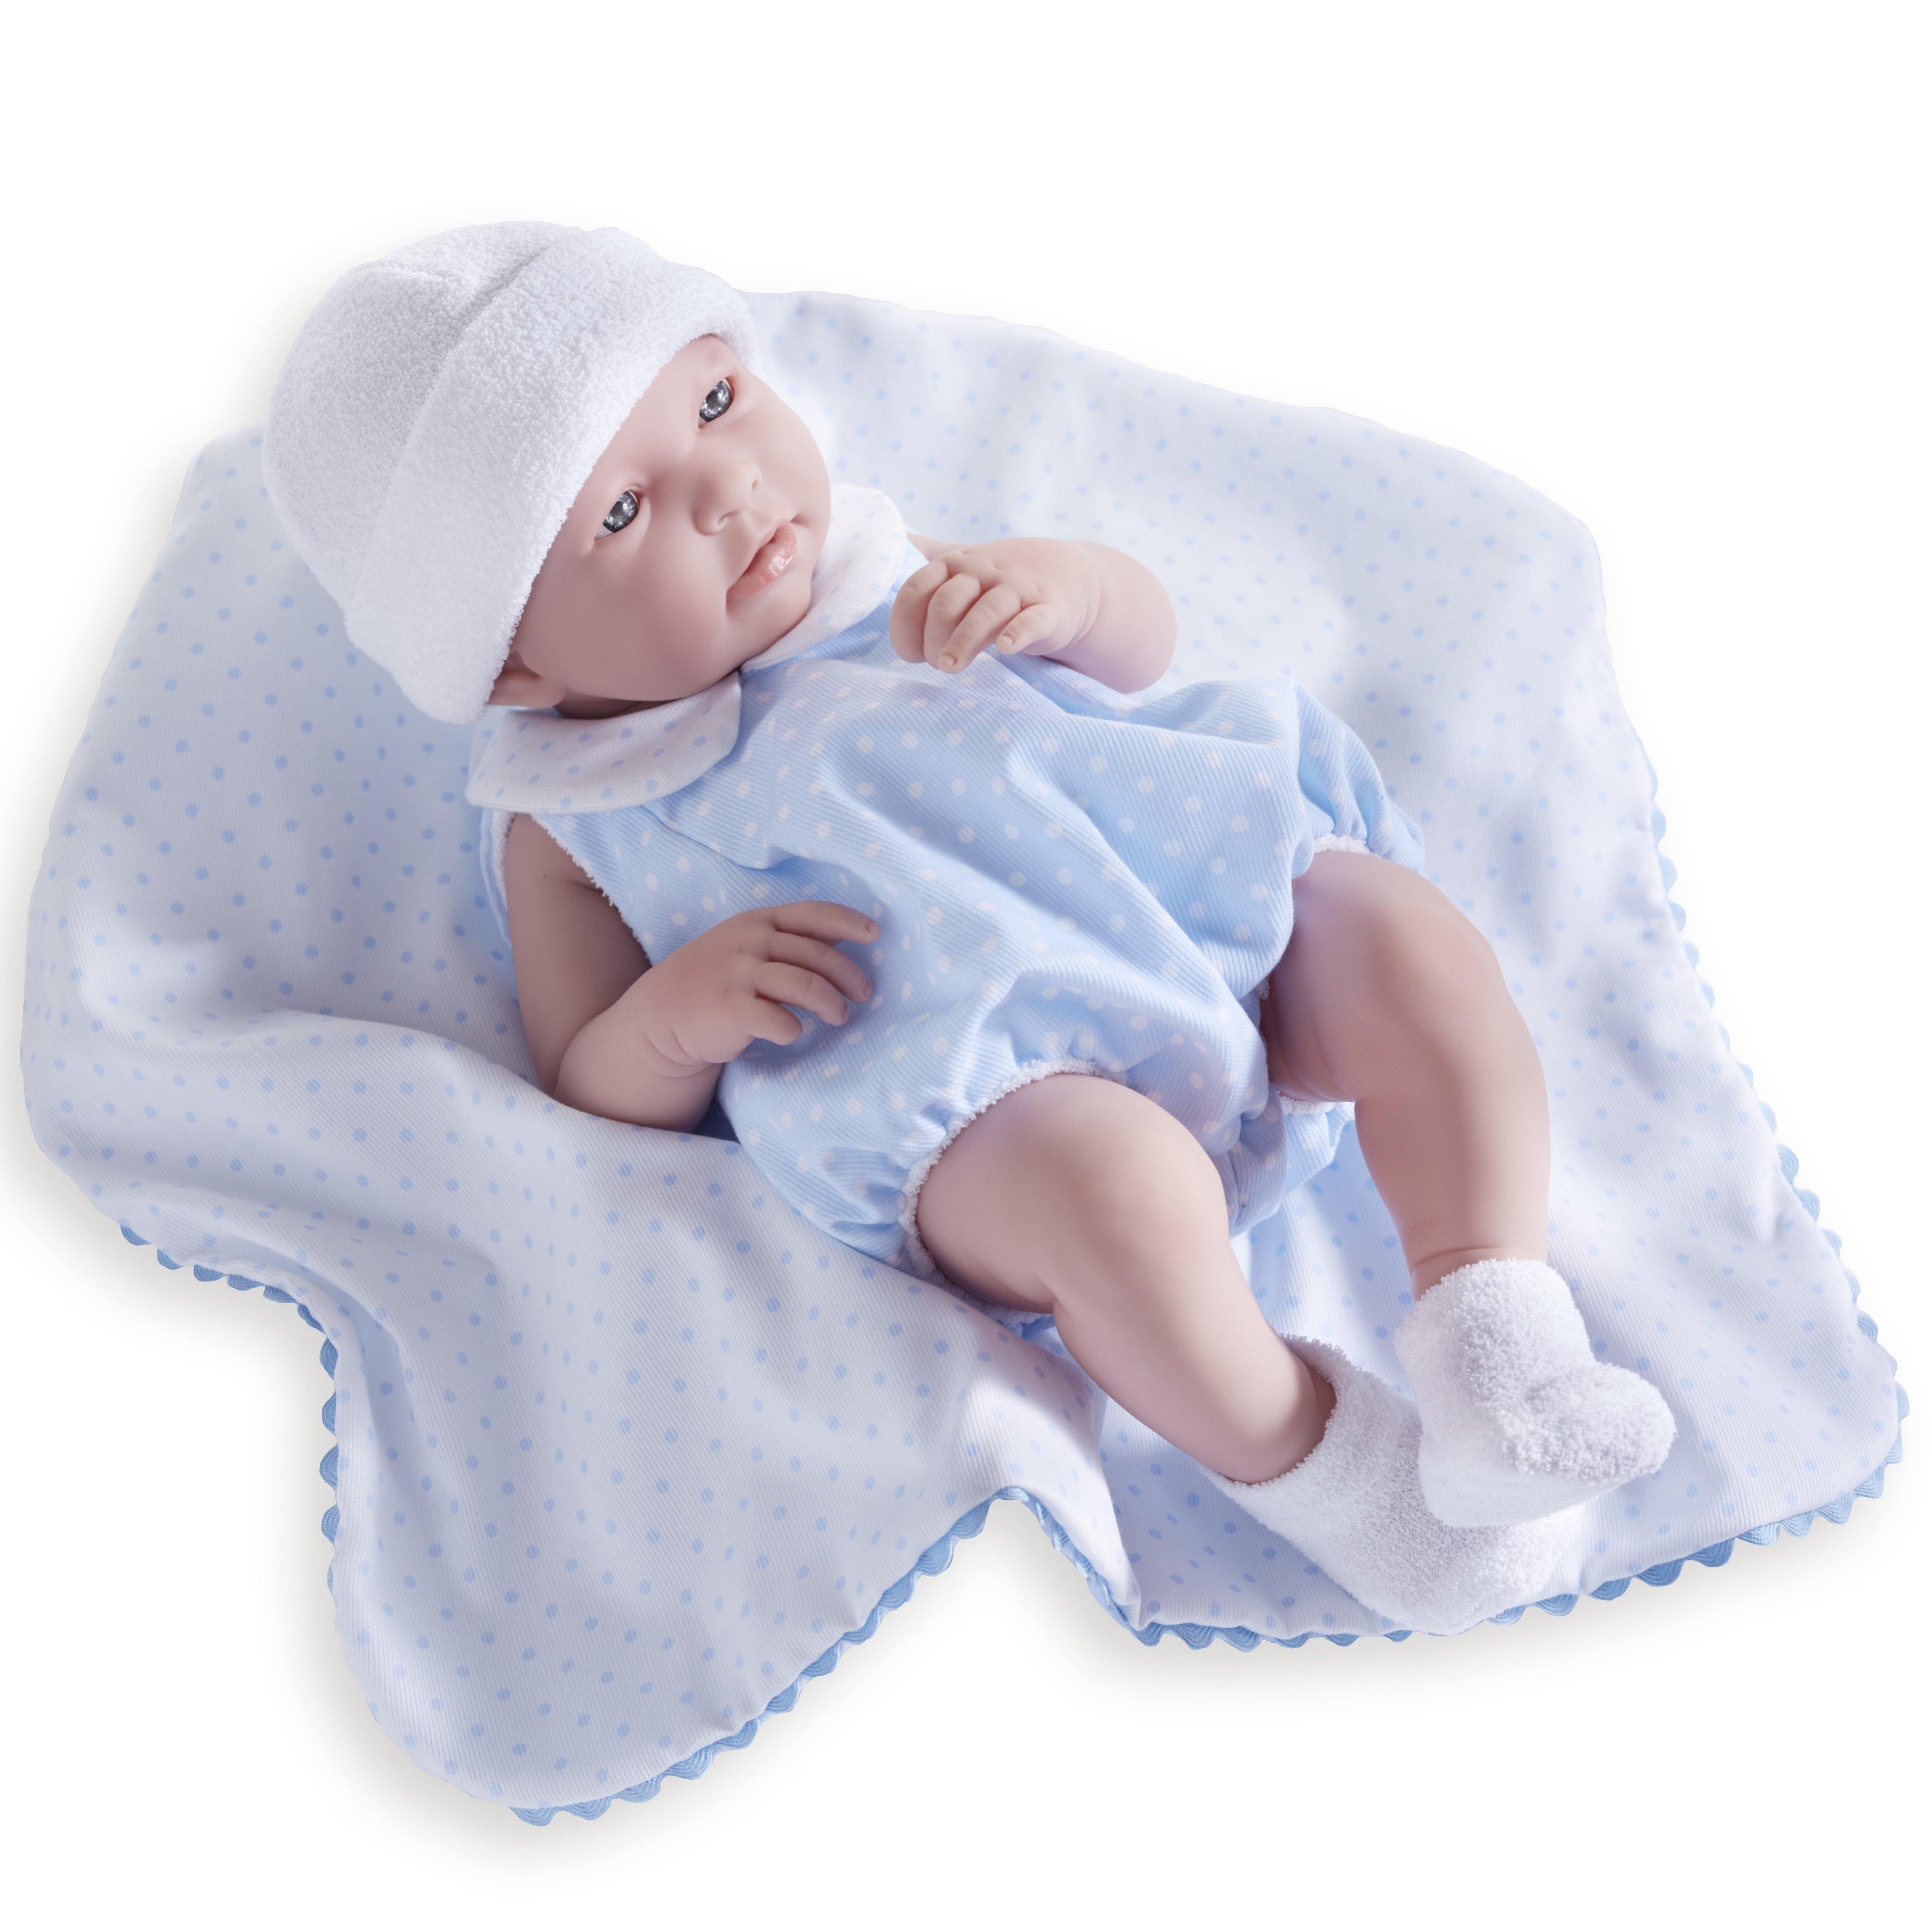 Realistic Baby Boy Doll | La Newborn Doll with Blue Outfit – JC